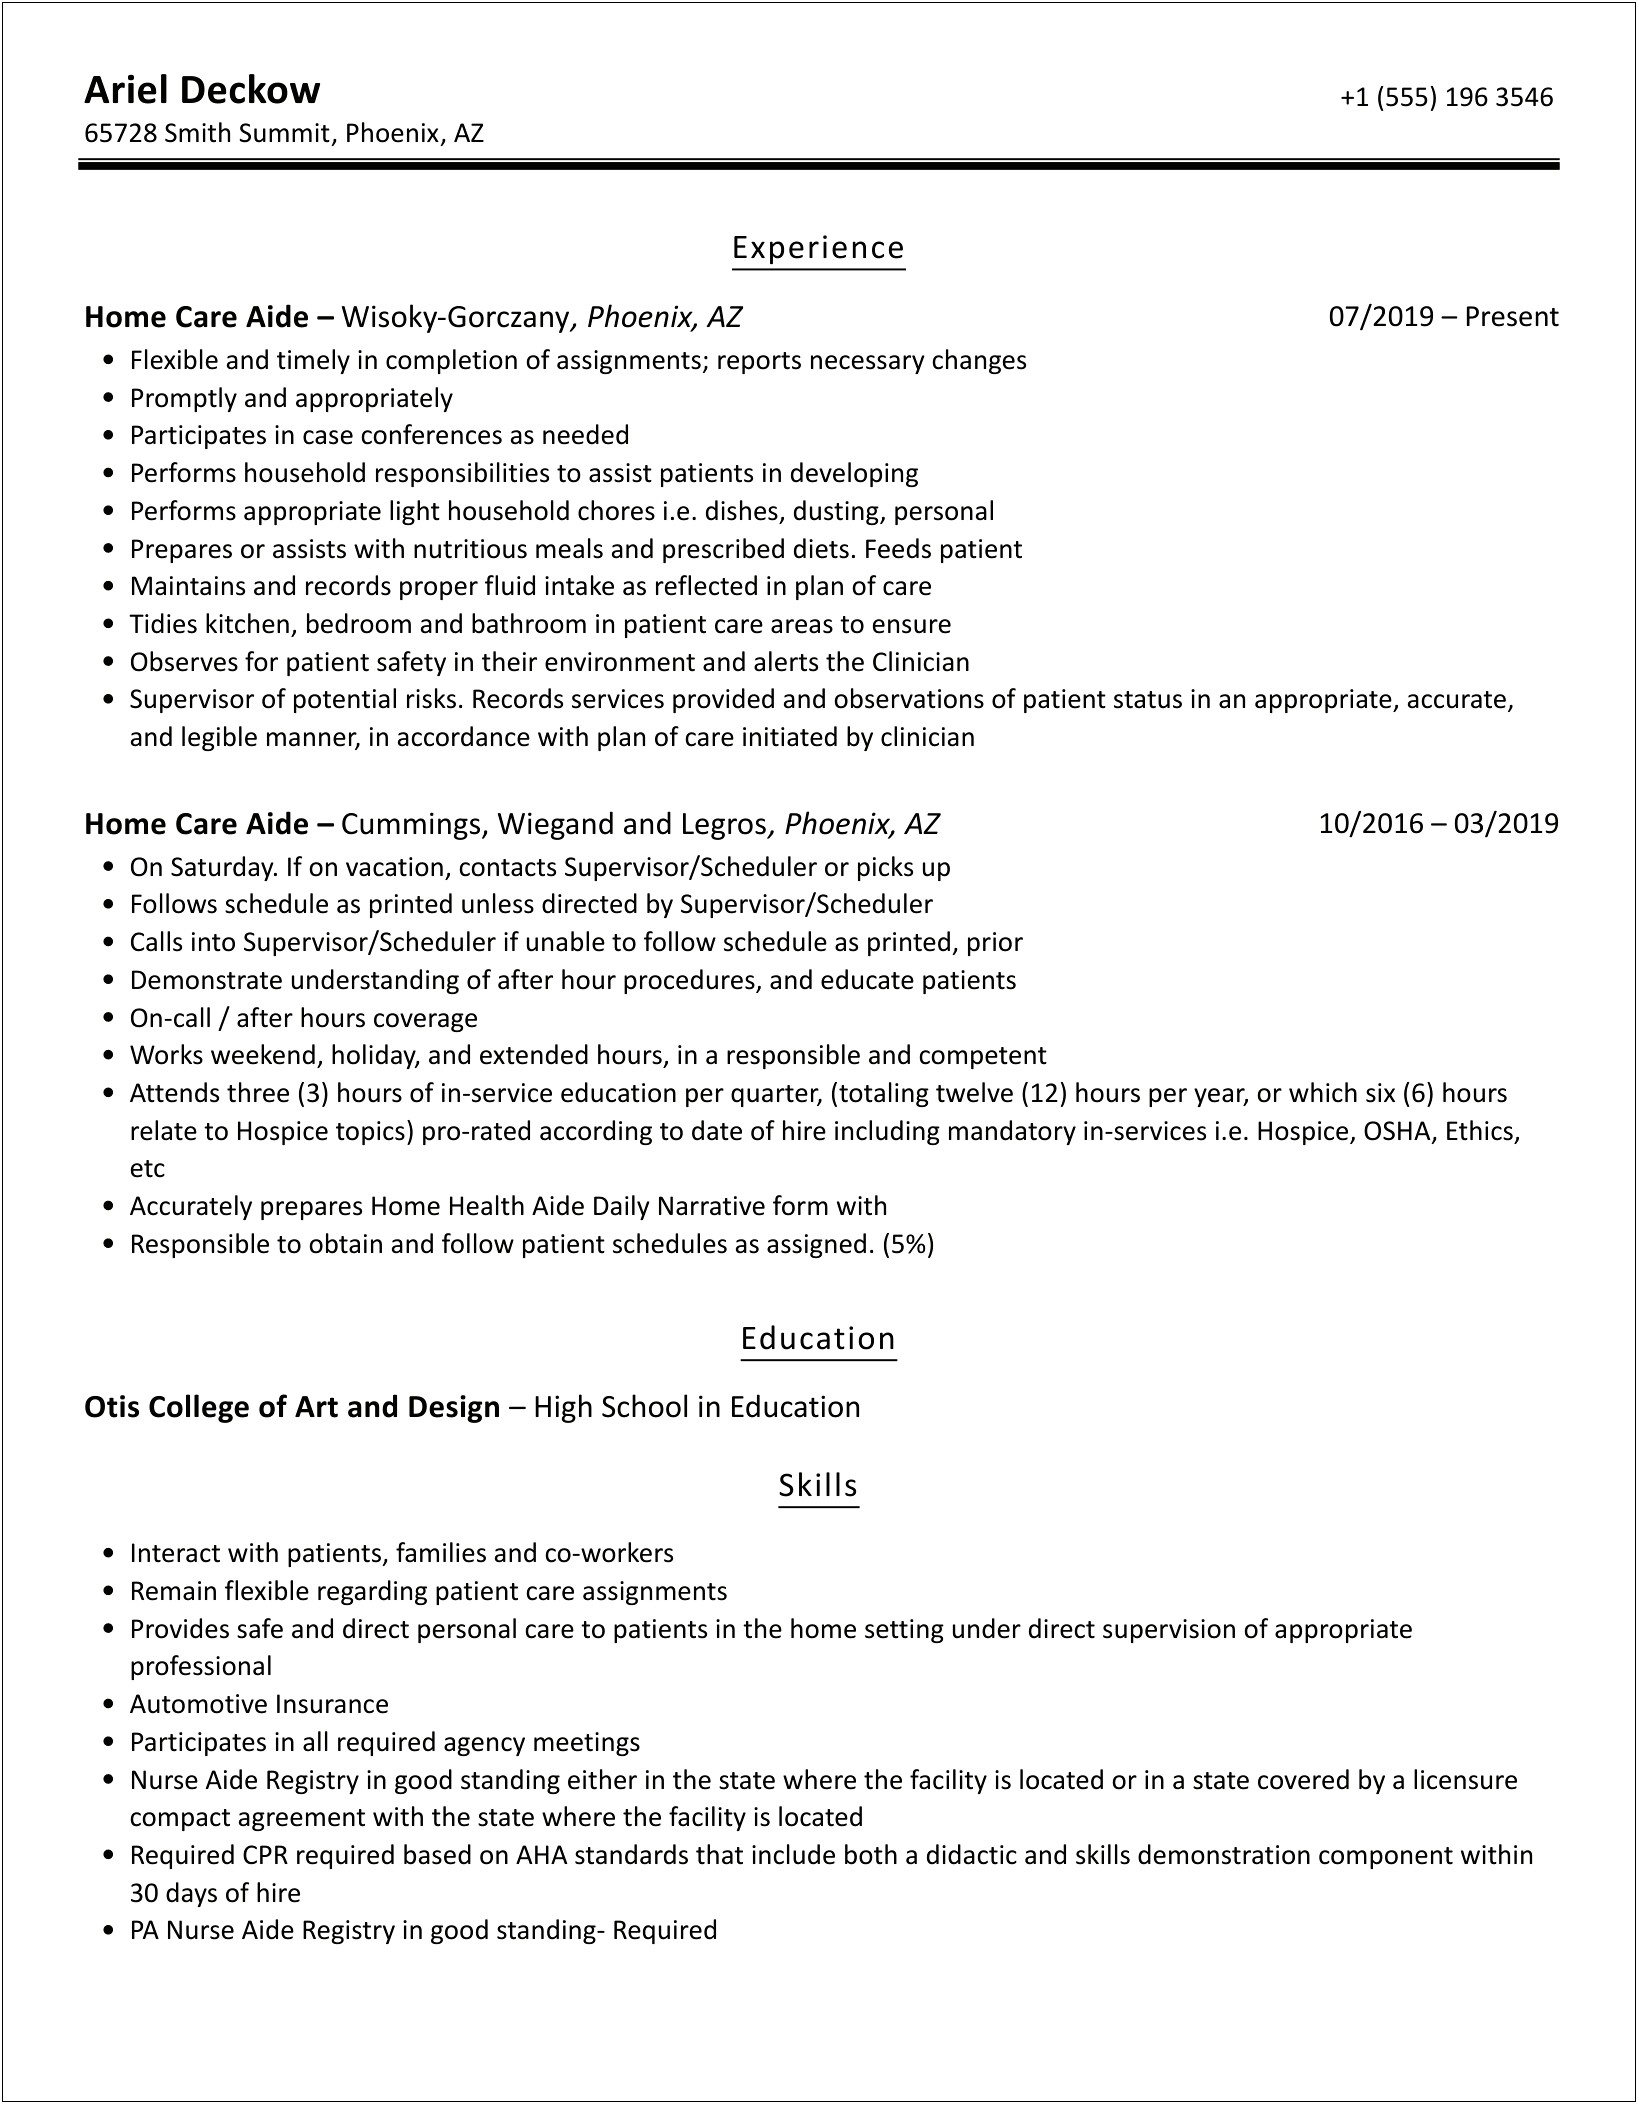 Resume Of Home Health Aide Skills Checklist